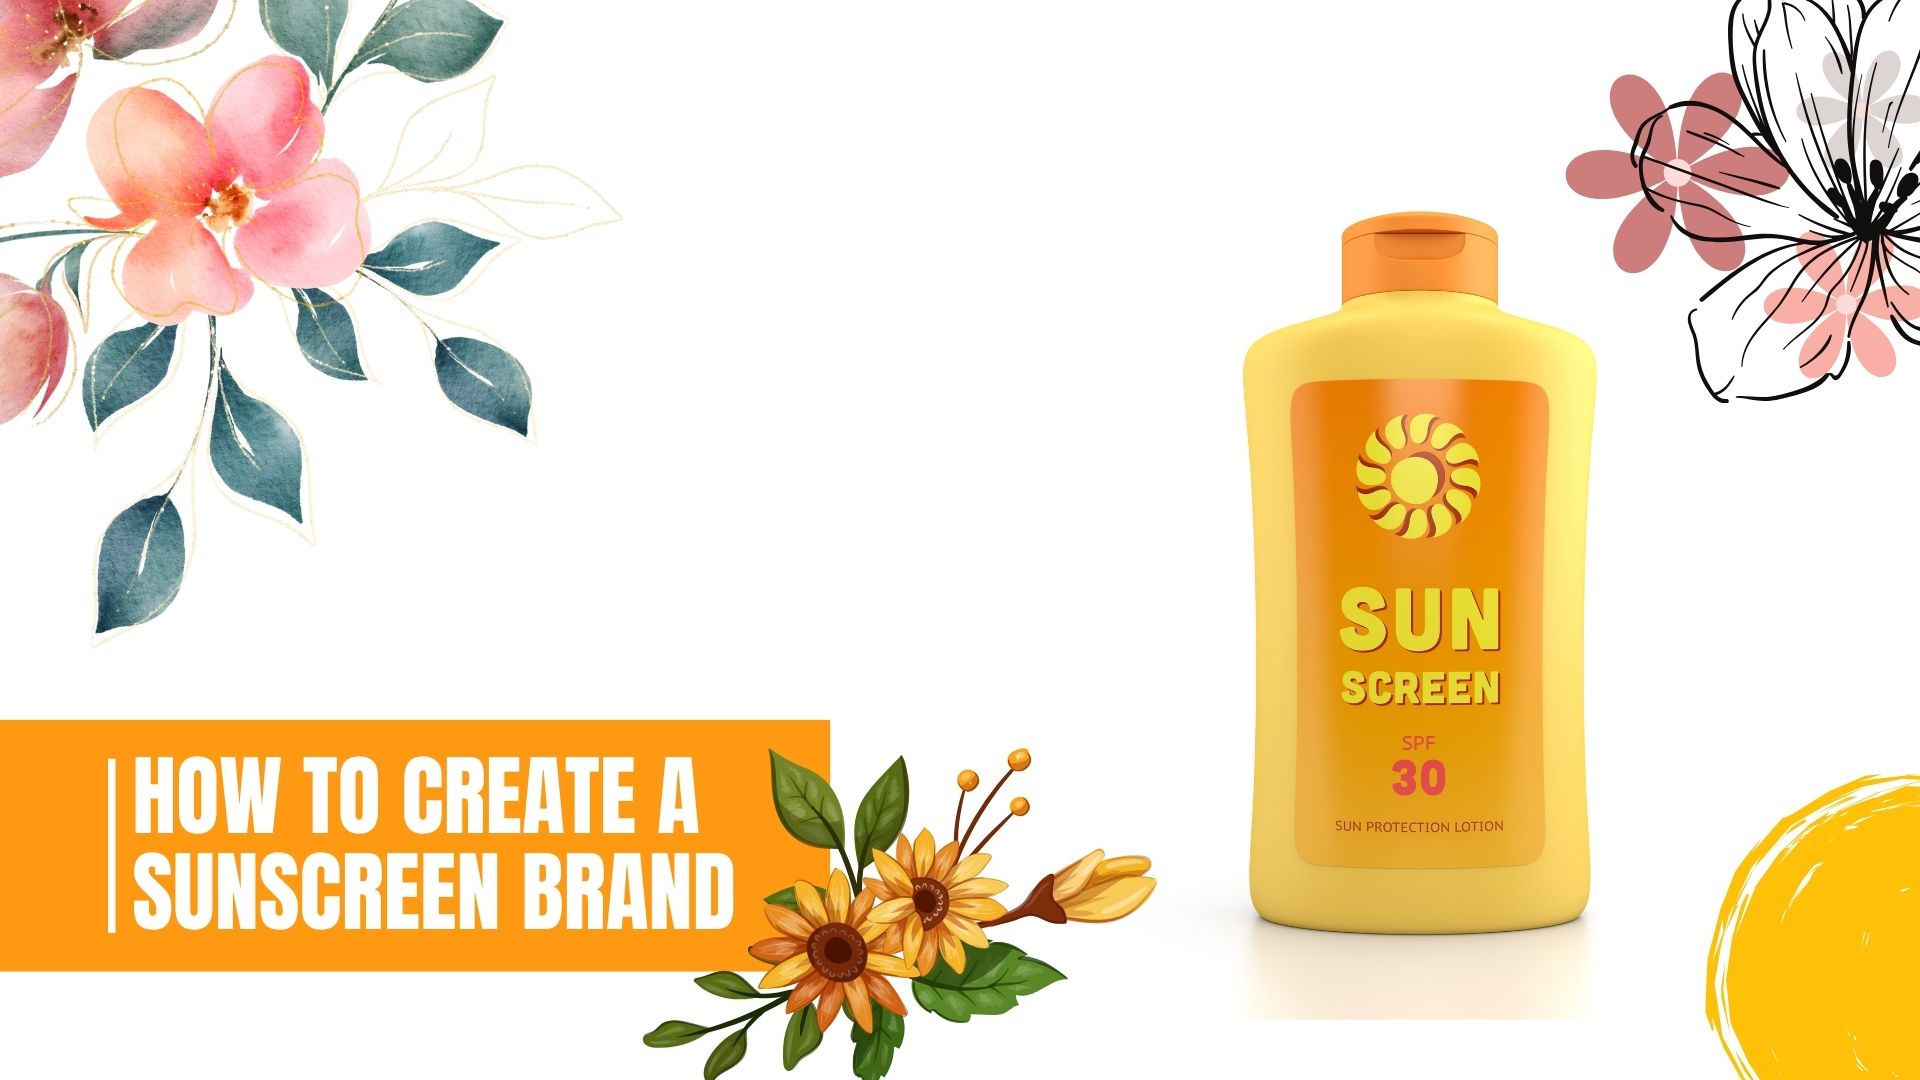 How to Create a Sunscreen Brand